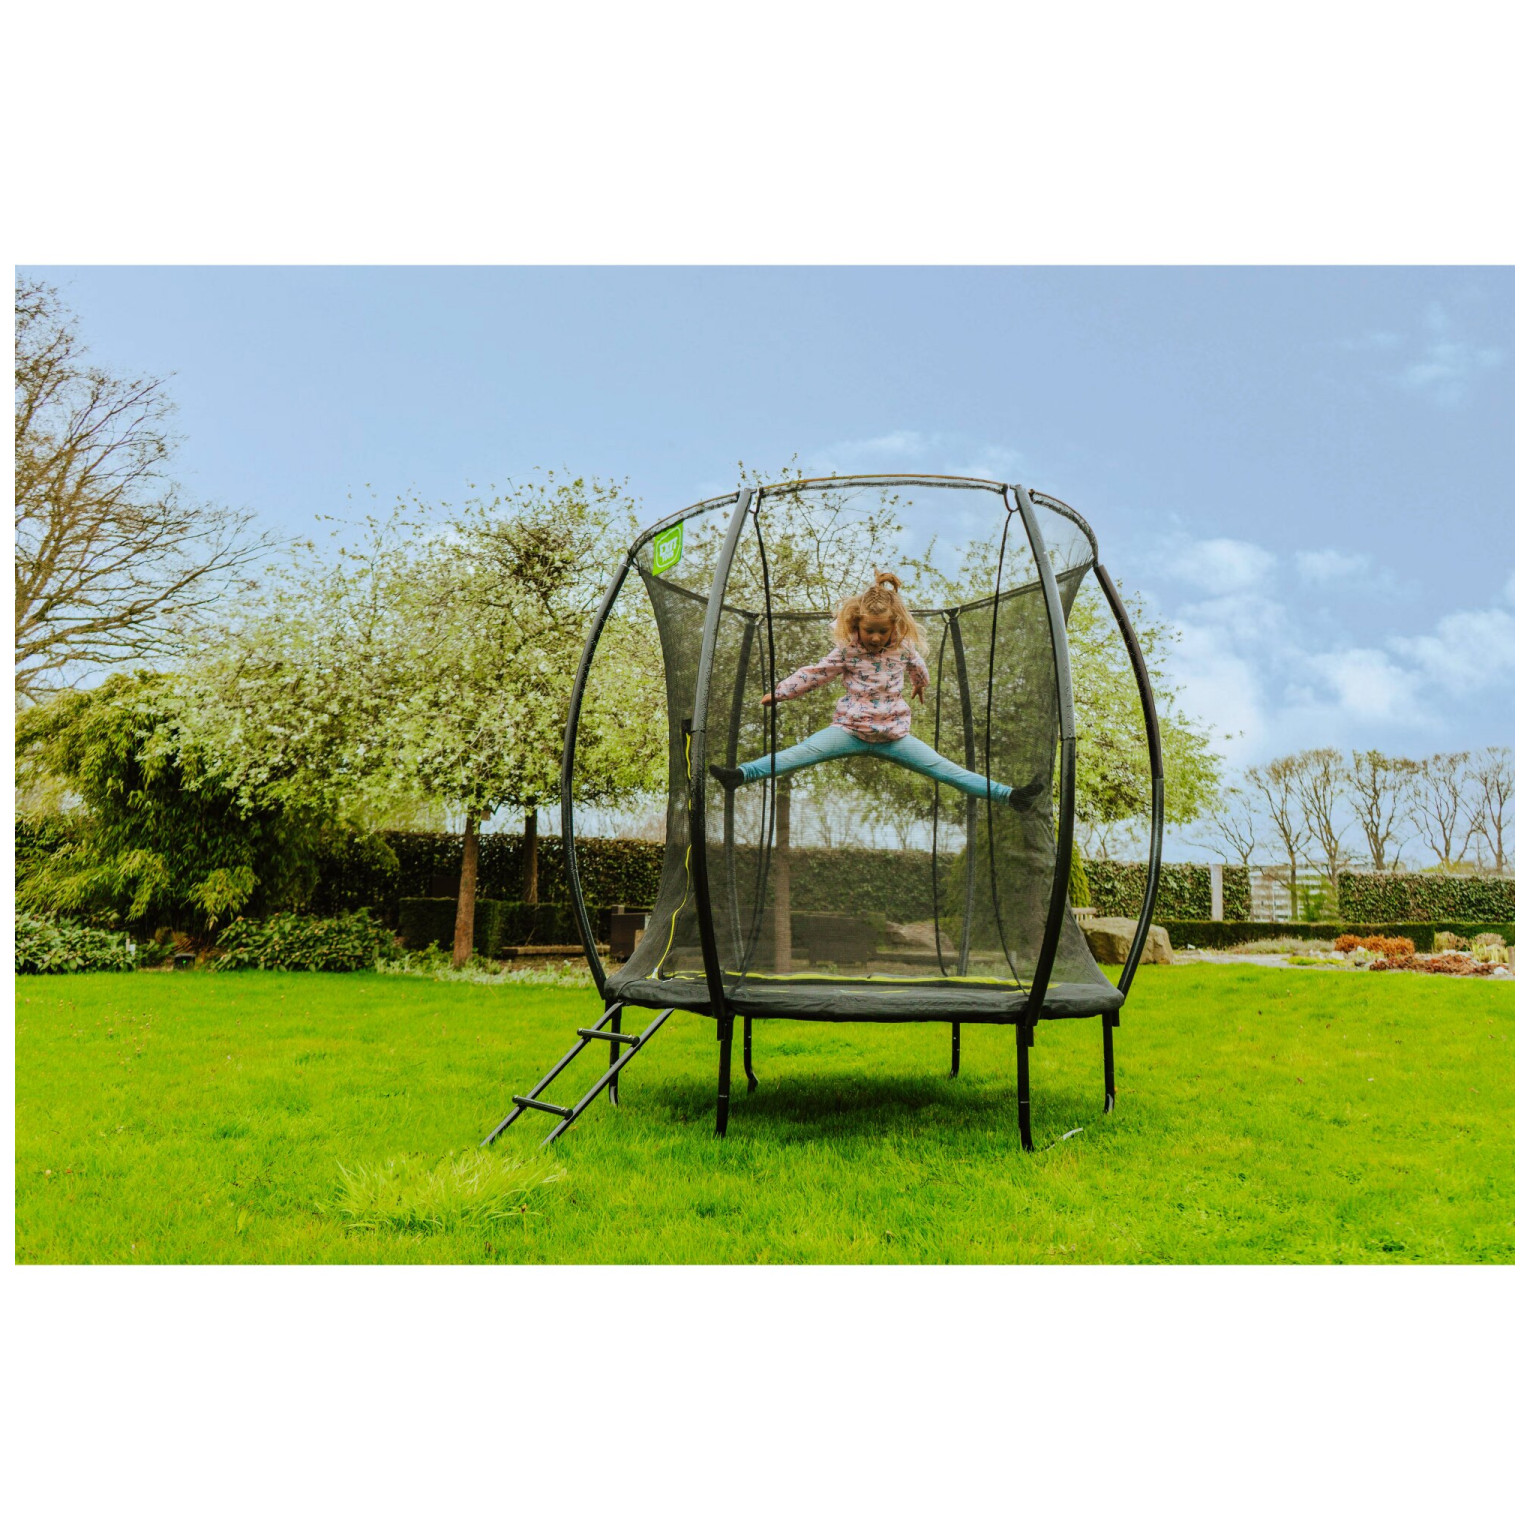 EXIT Silhouette trampoline ø183cm - groen